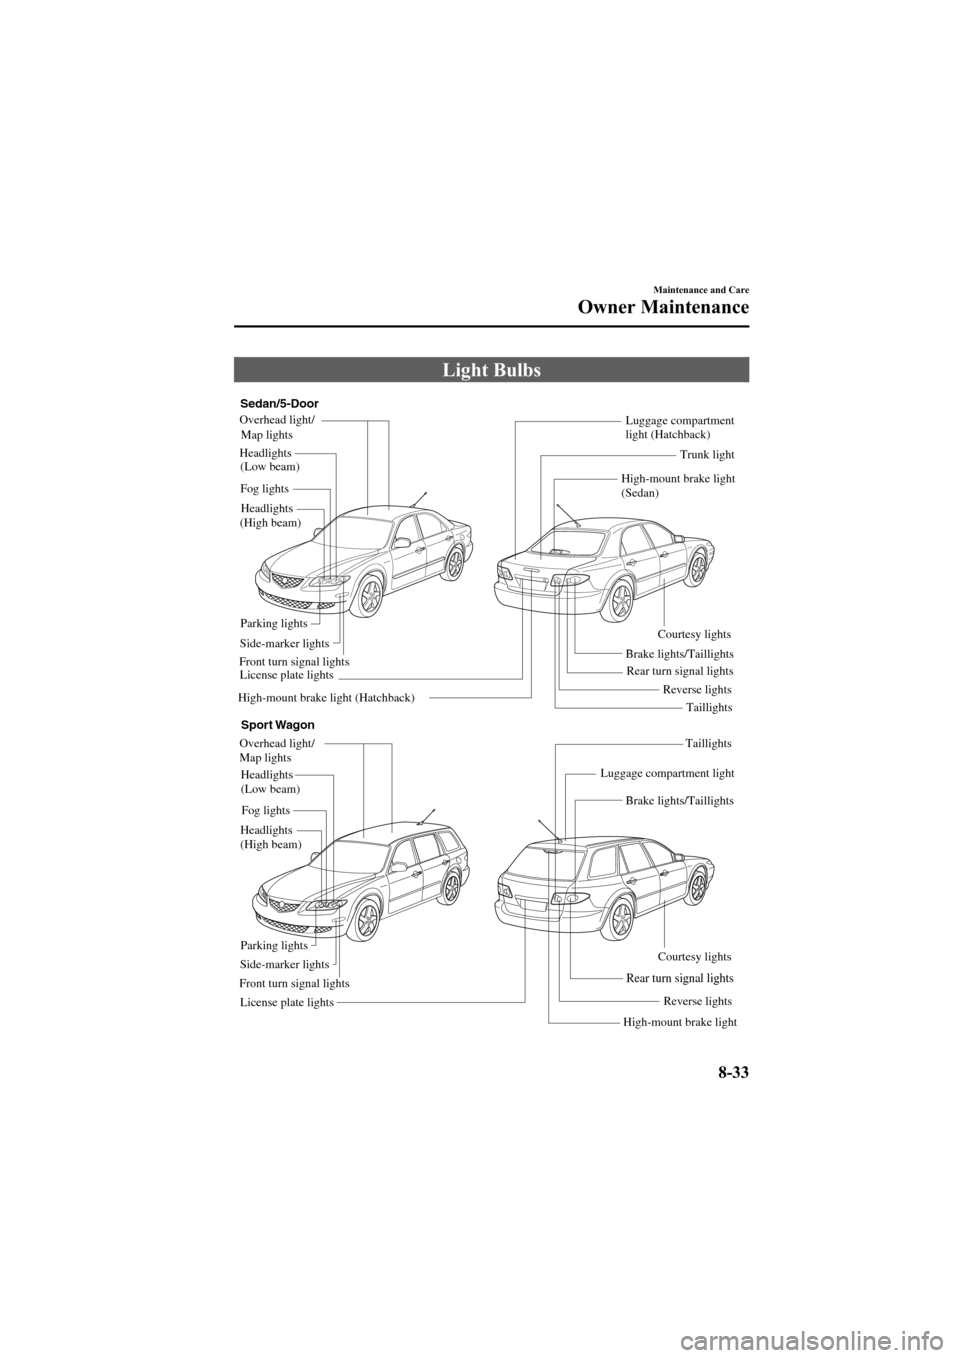 MAZDA MODEL 6 2005  Owners Manual (in English) Black plate (283,1)
Light Bulbs
Luggage compartment 
light (Hatchback)
High-mount brake light 
(Sedan)
Headlights
(High beam)Headlights
(Low beam) Overhead light/ 
Map lights
Luggage compartment light